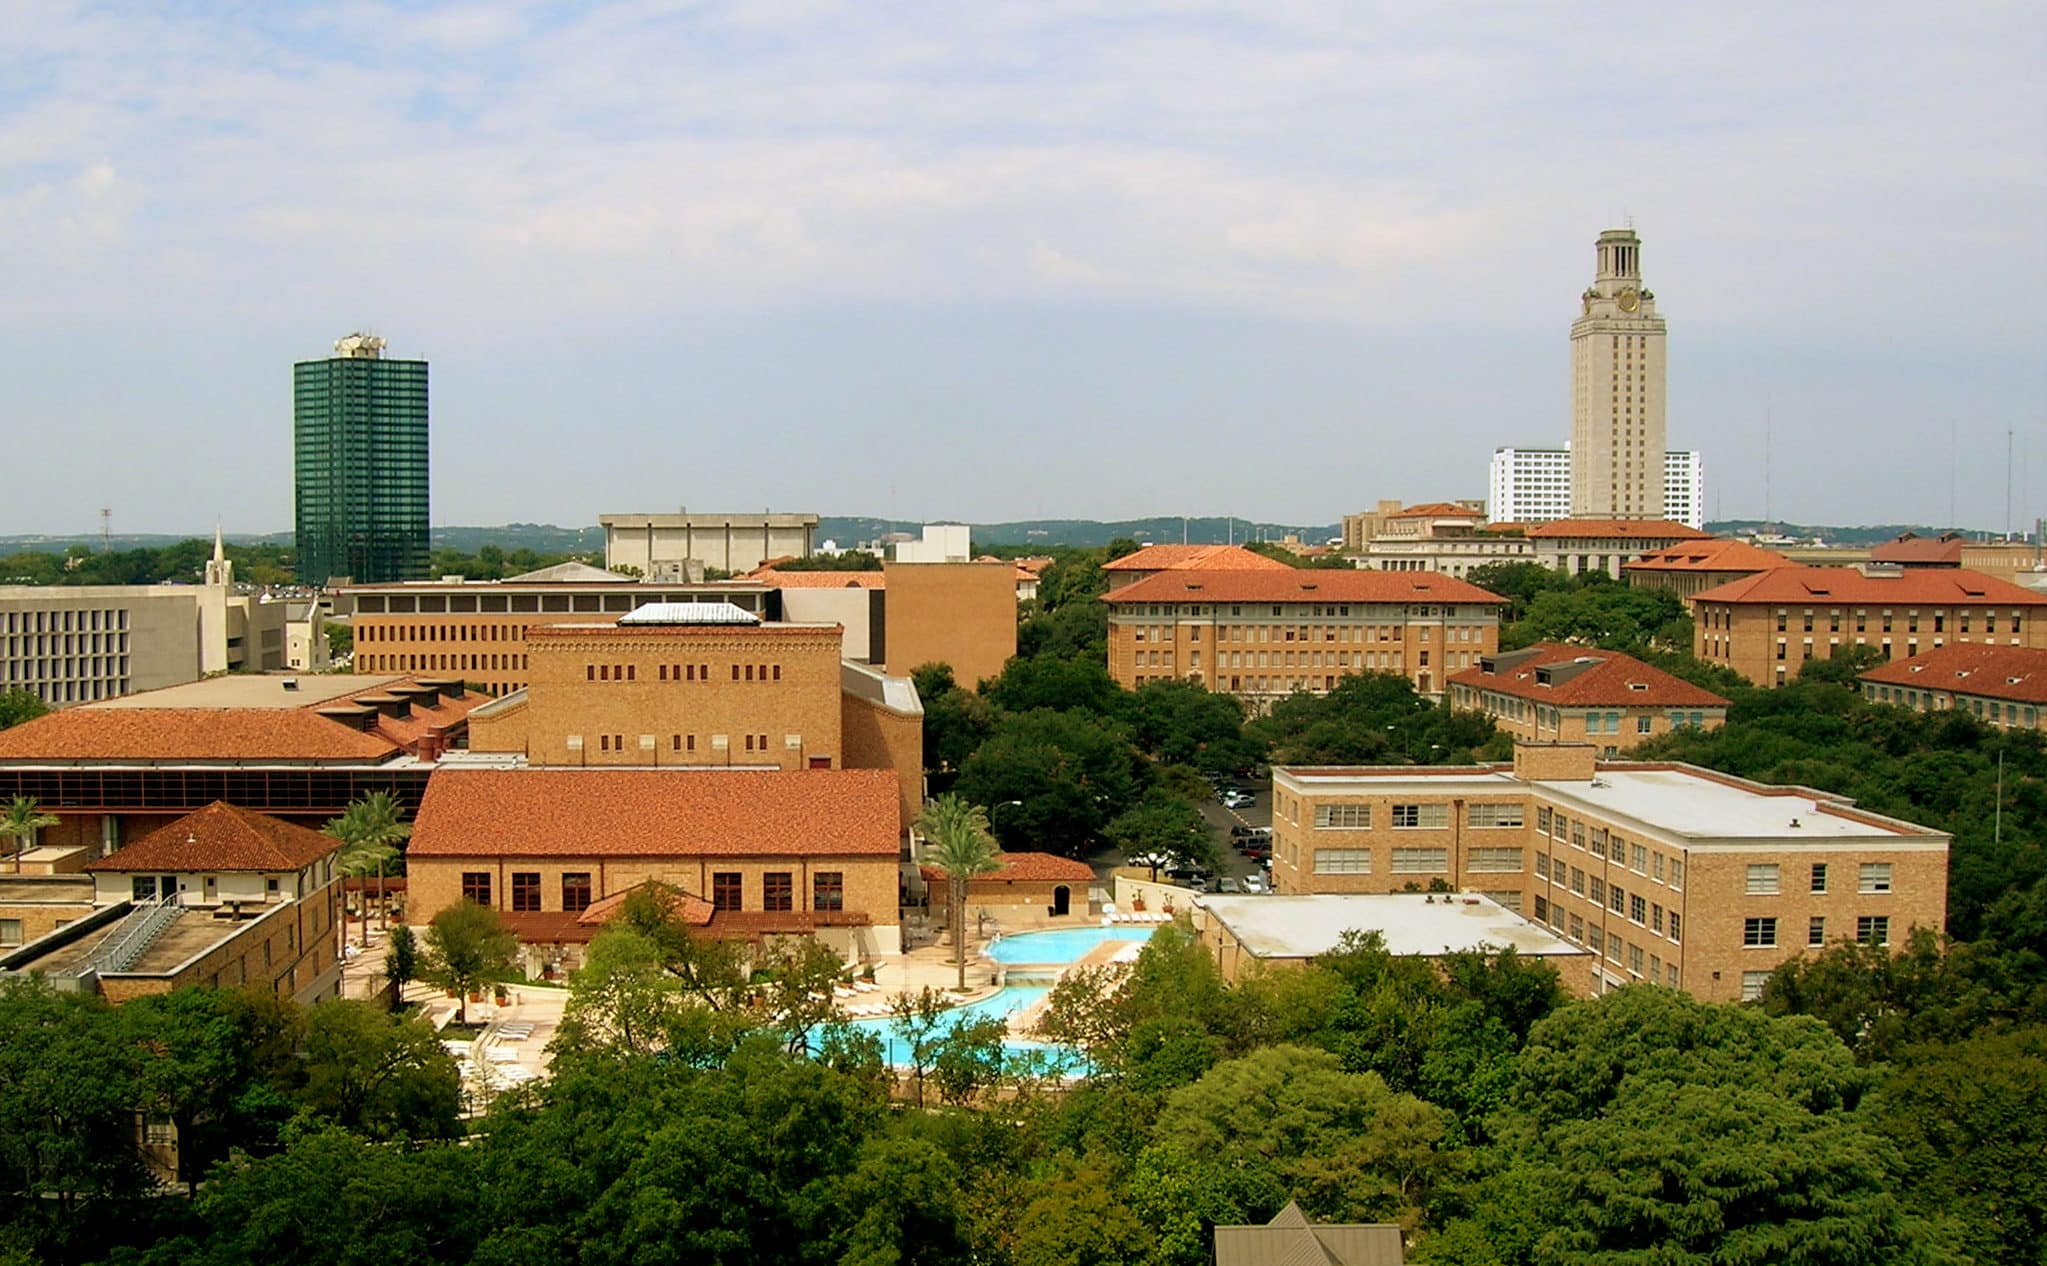 University of Texas, Austin. Courtesy of freeimages.com.